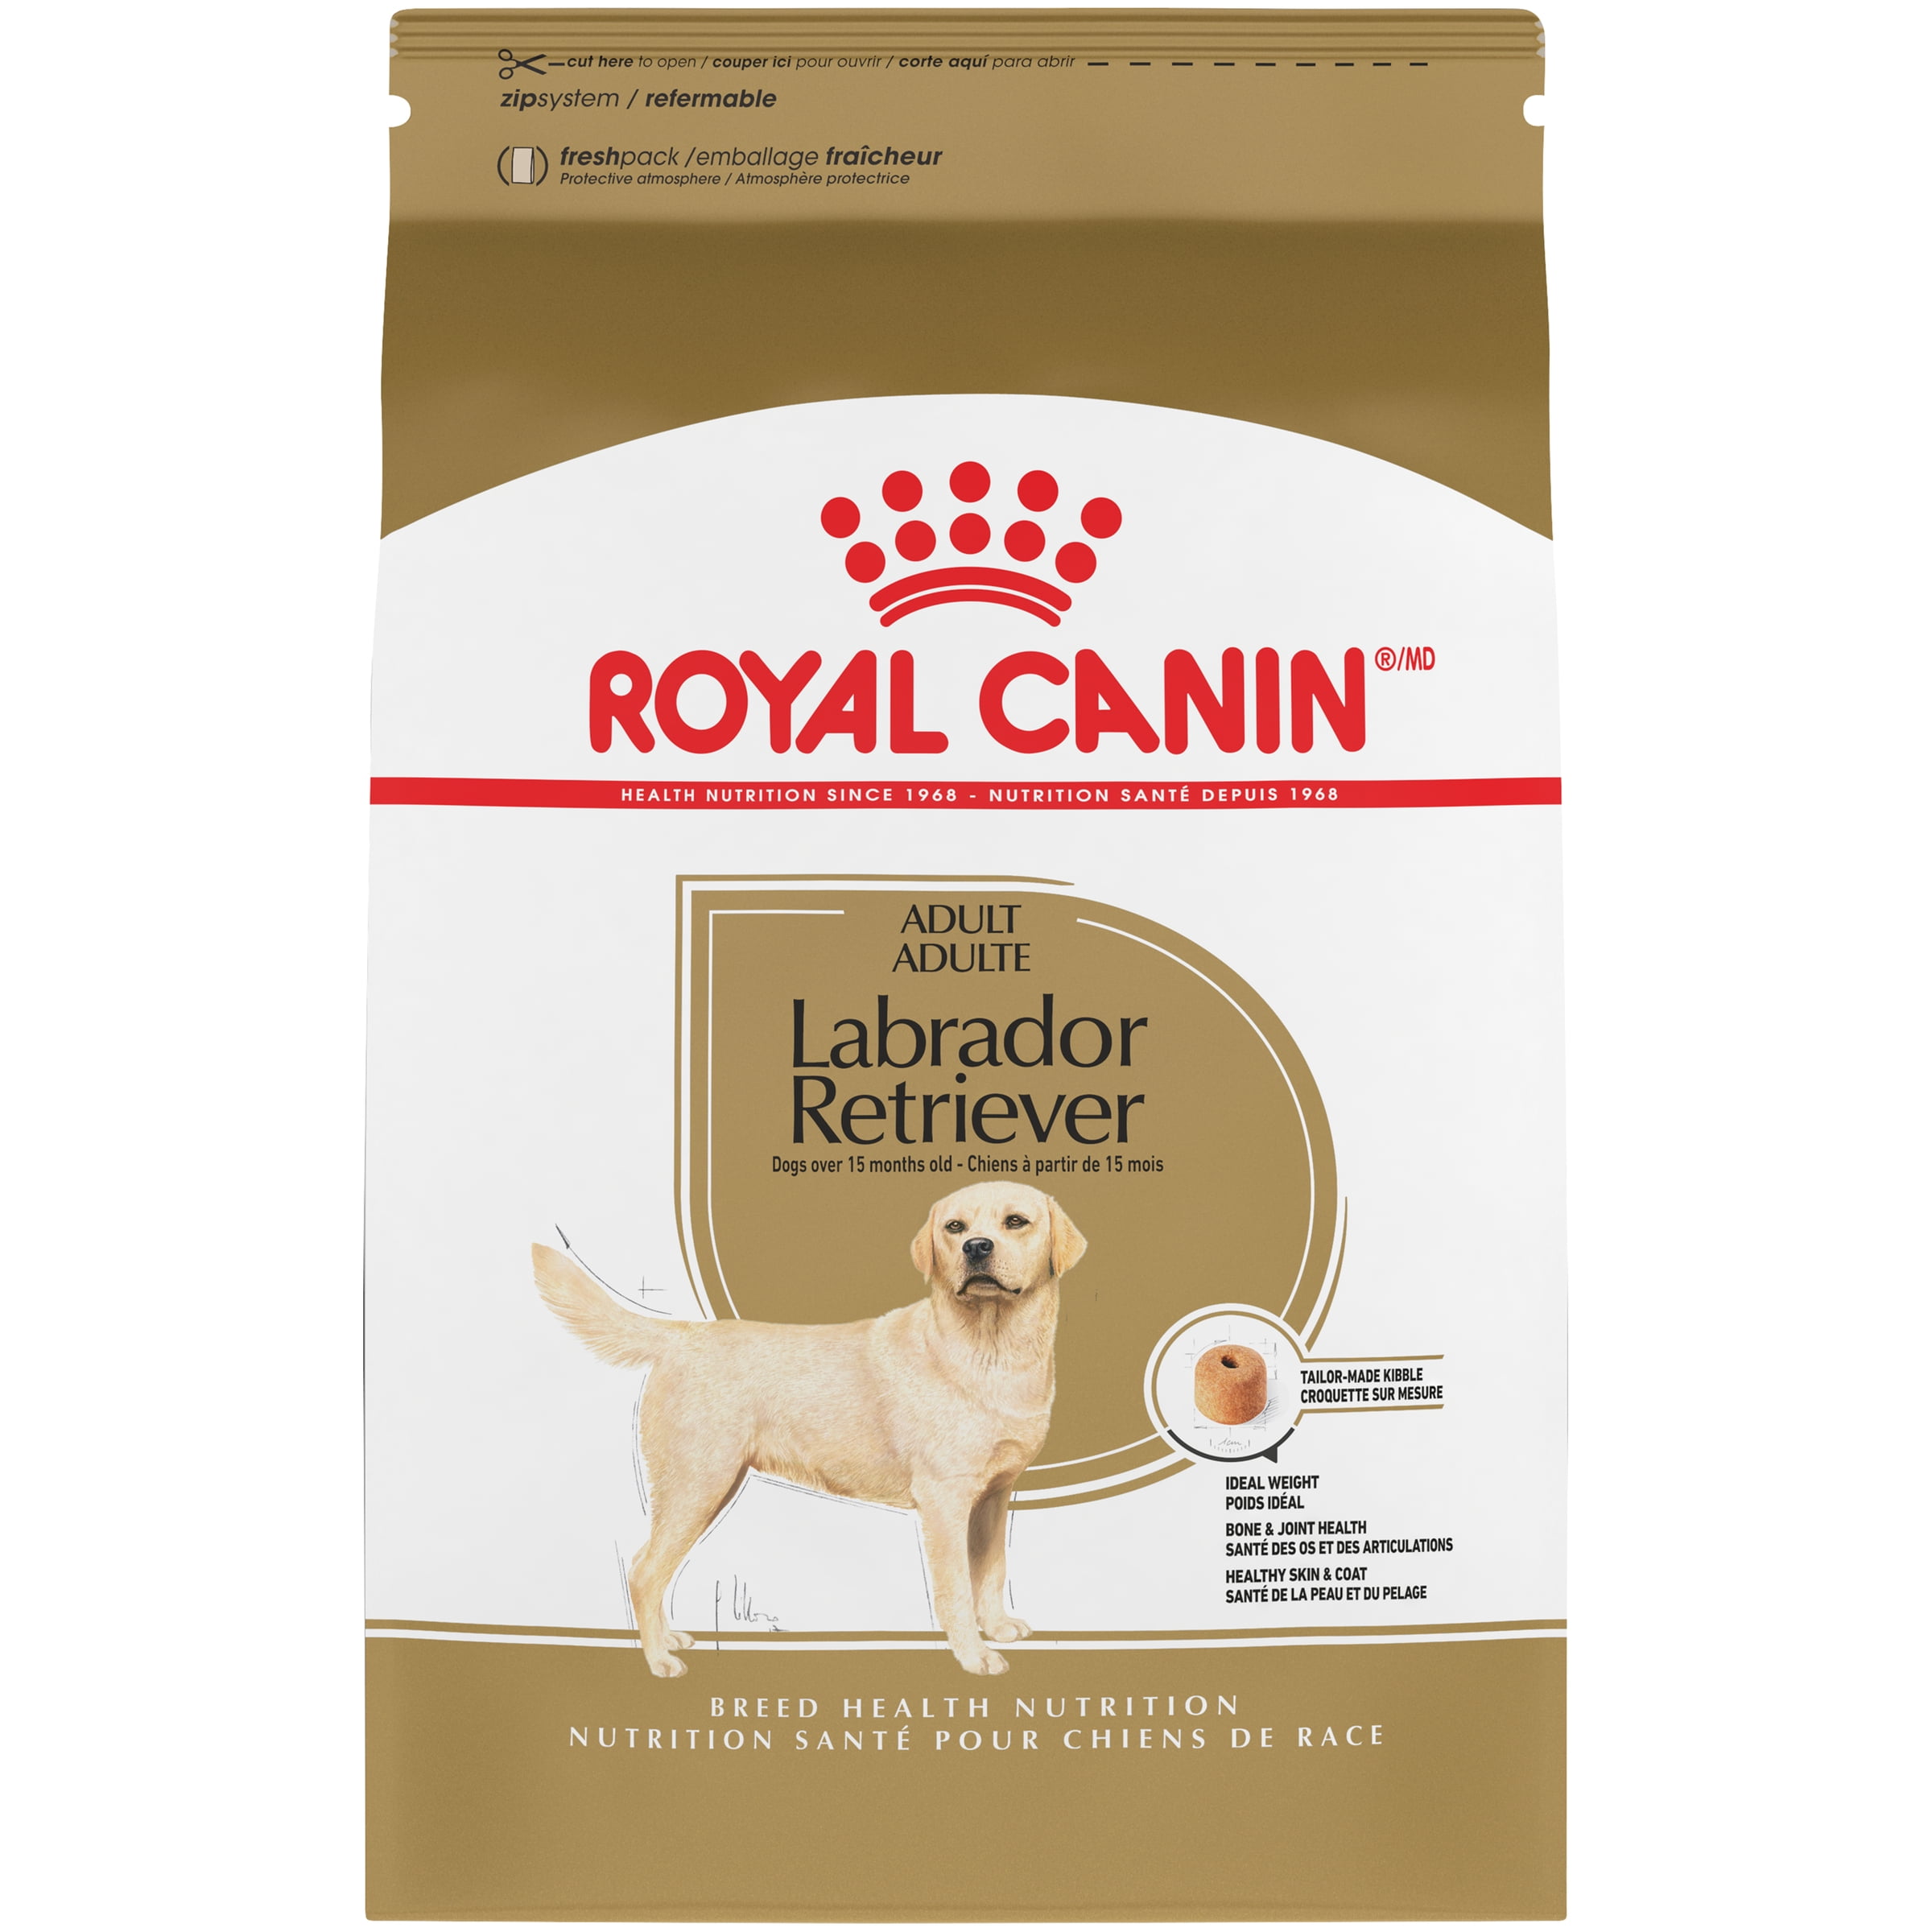 royal canin dog food price comparison